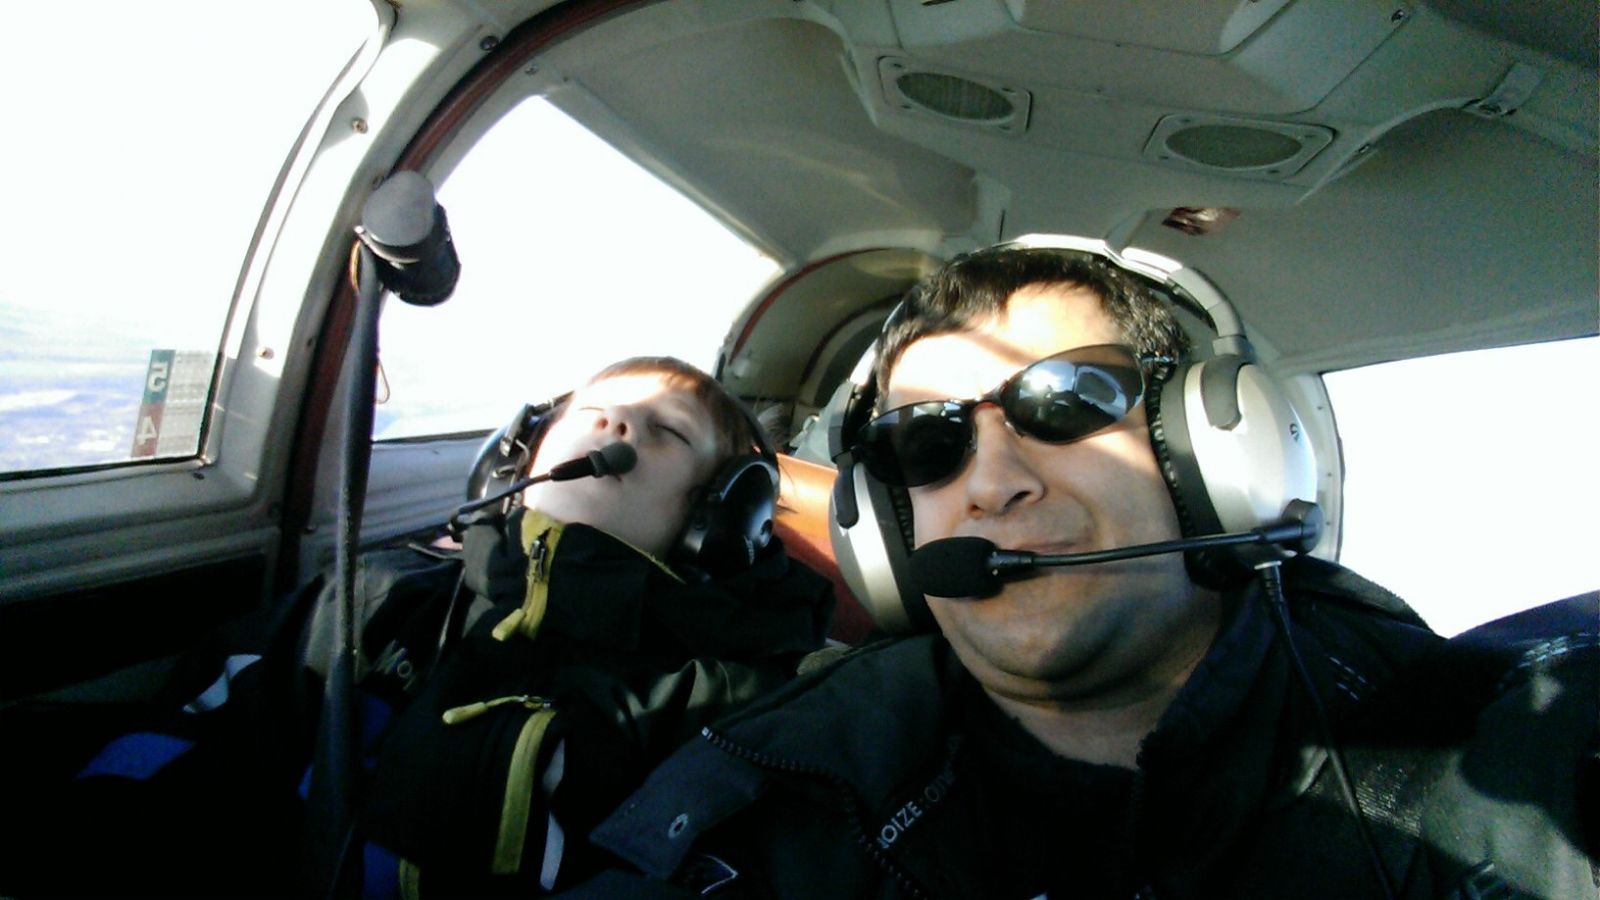 My favorite co-pilot